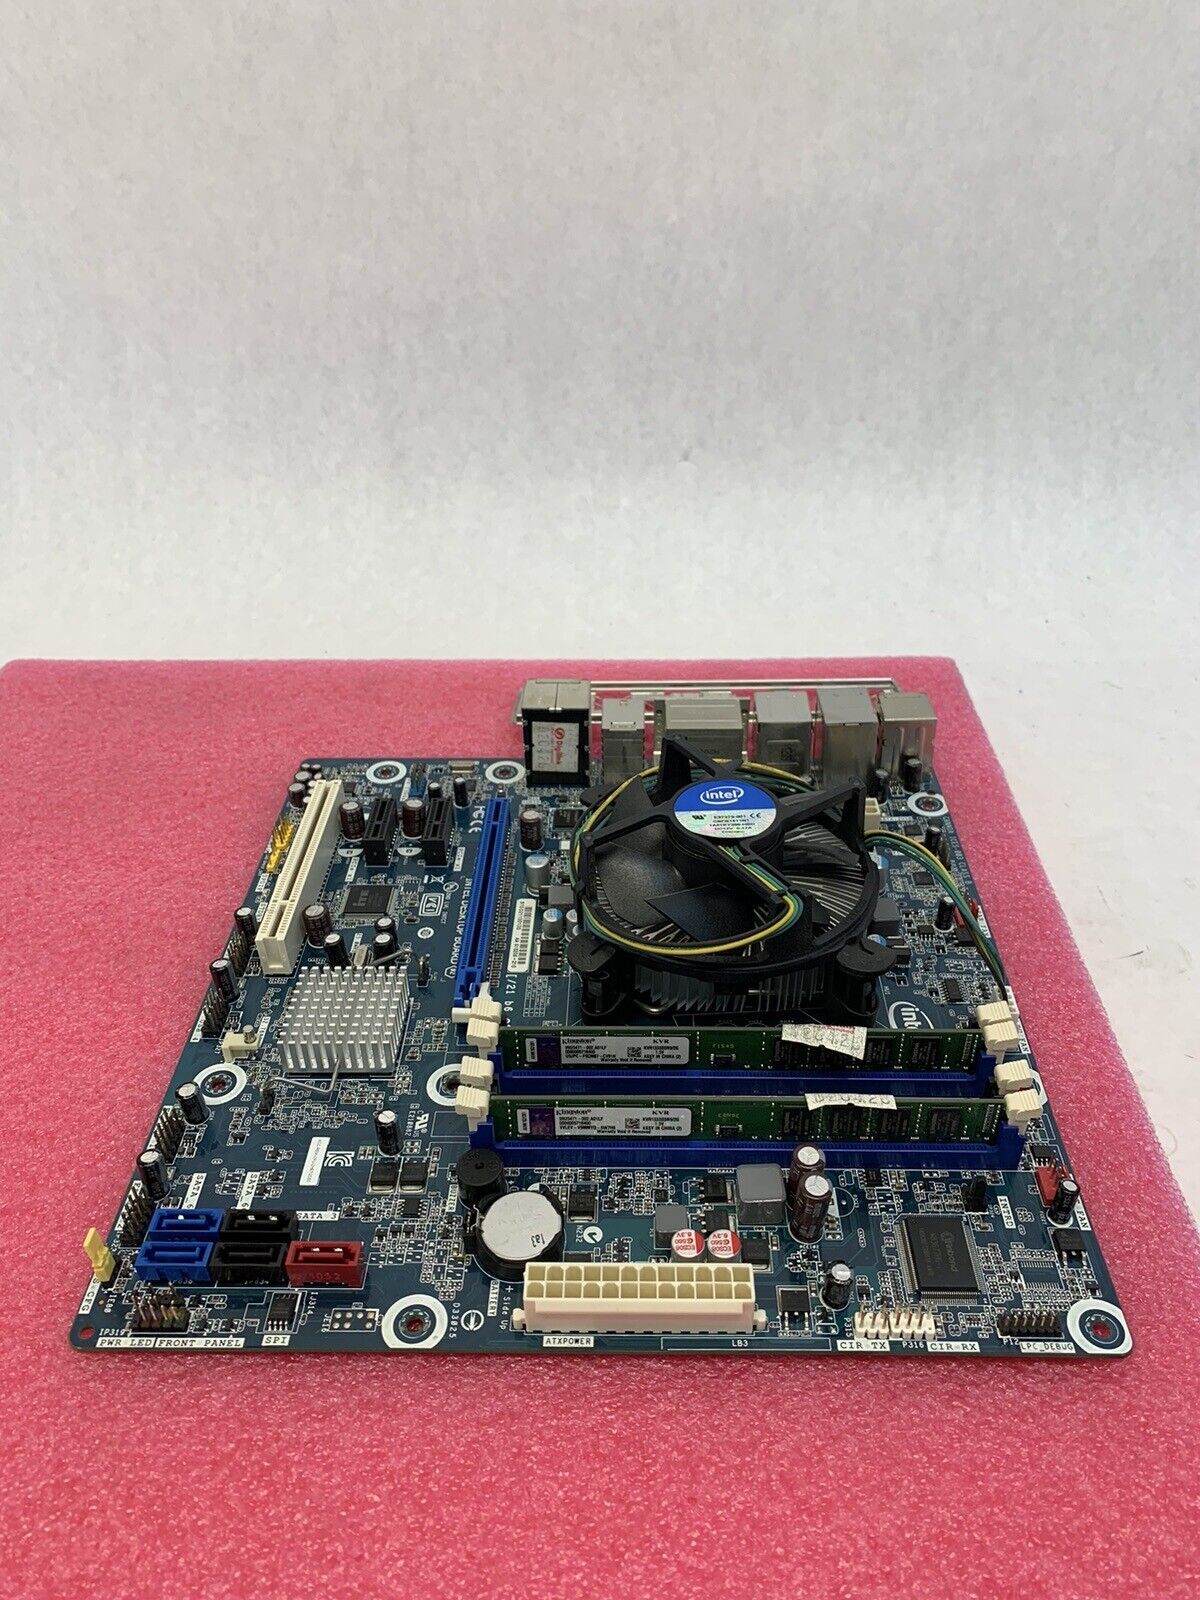 Intel DH67GD Motherboard Intel Core i3-2120 3.3GHz 4GB RAM w/Shield